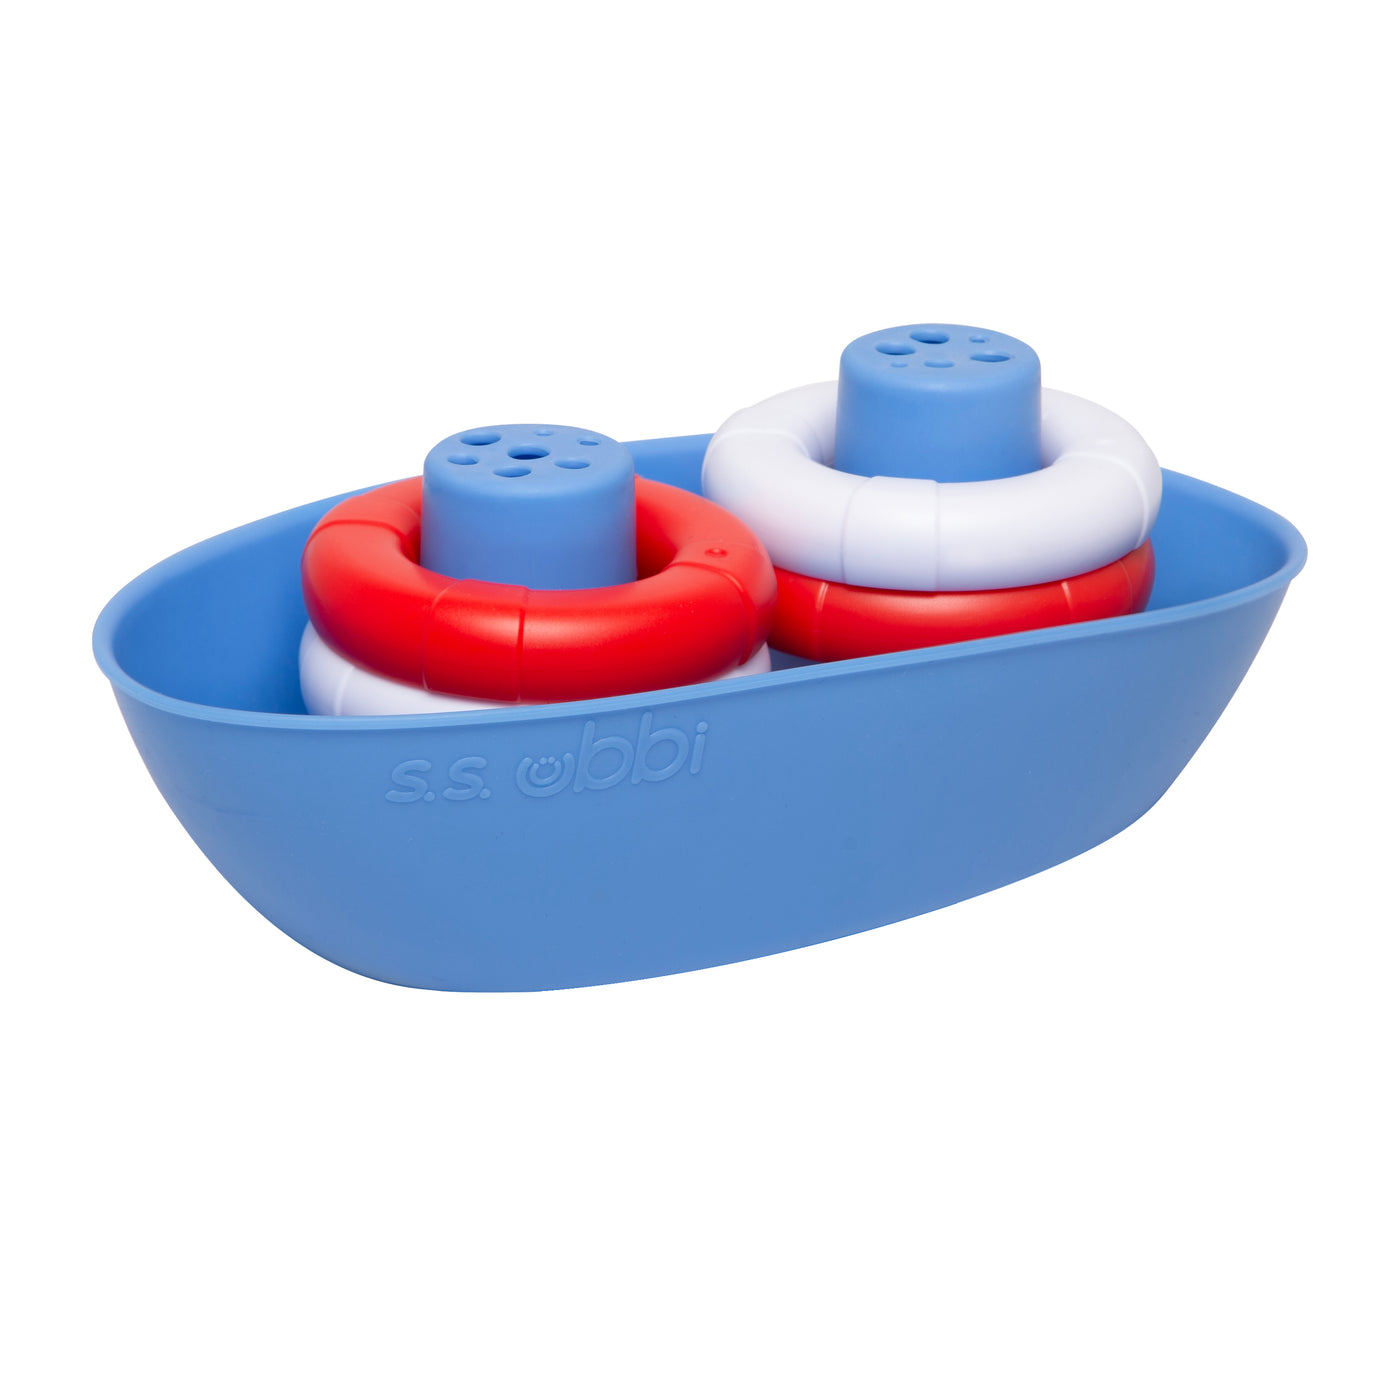 boat and buoys bath toy